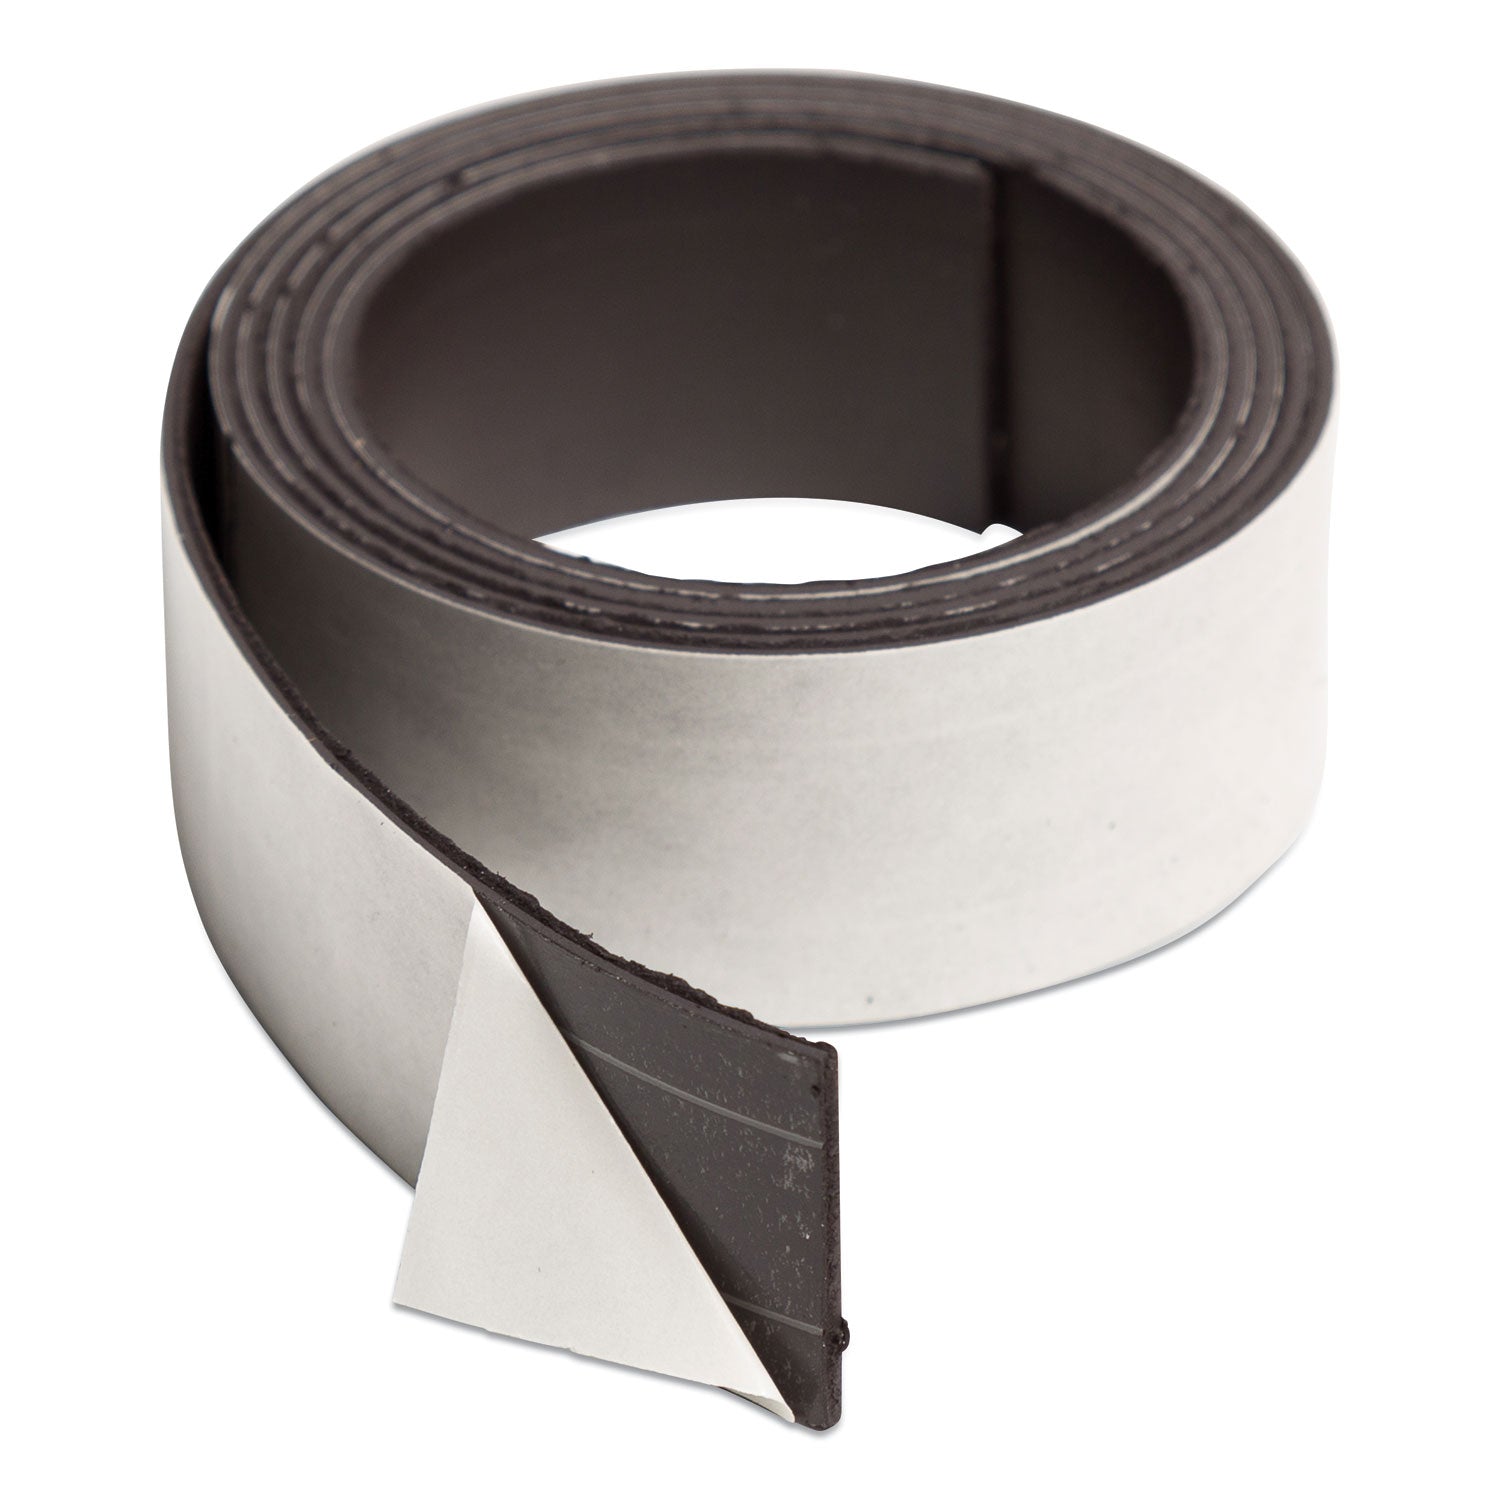 magnetic-adhesive-tape-roll-1-x-4-ft-black_ubrfm2020 - 1